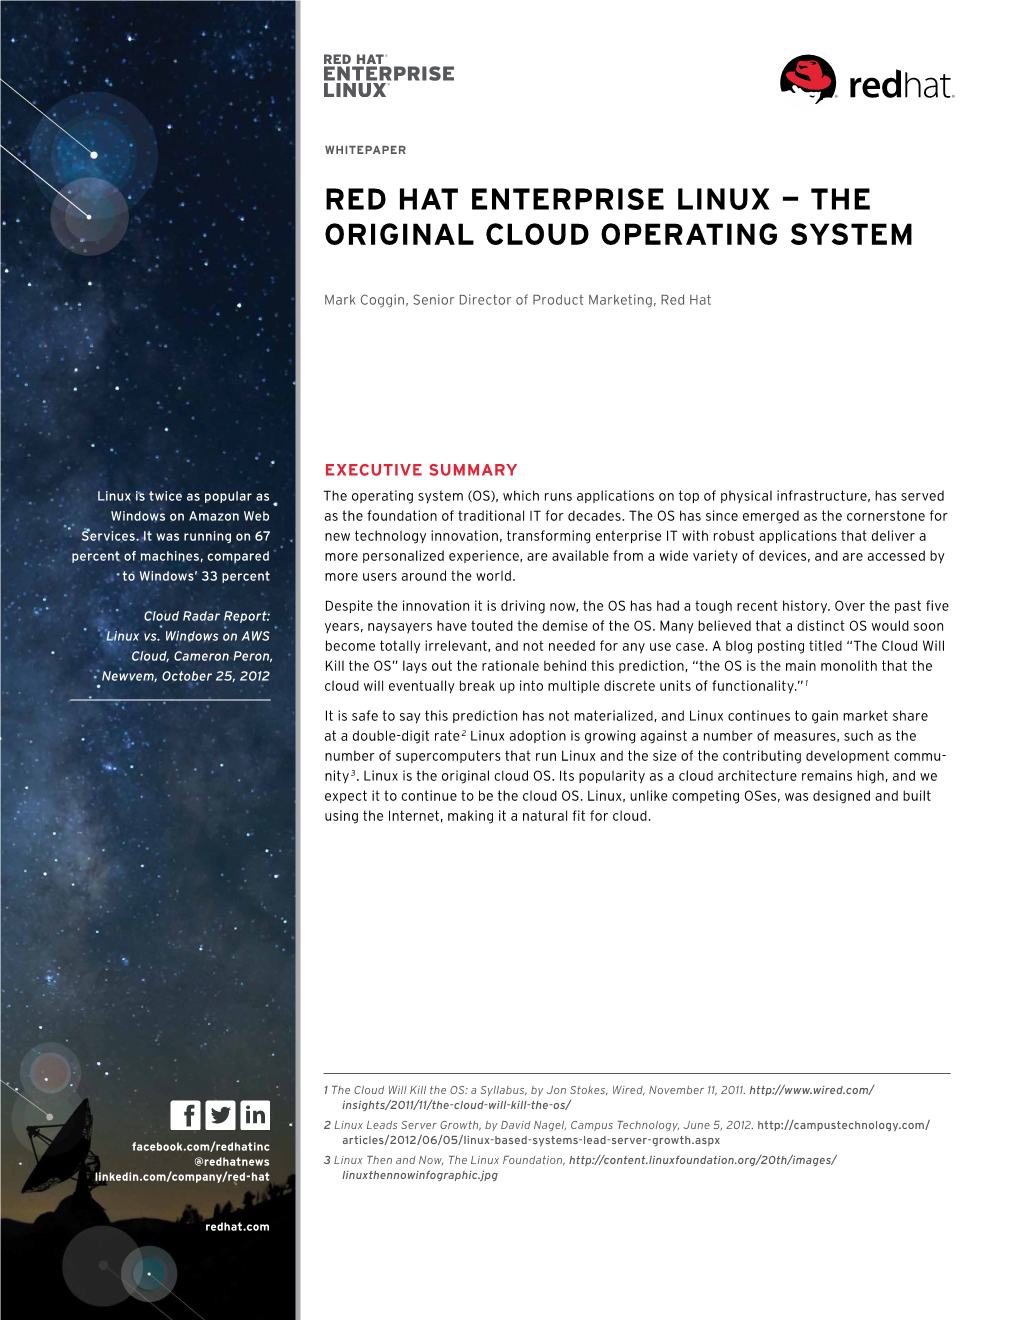 Red Hat Enterprise Linux — the Original Cloud Operating System